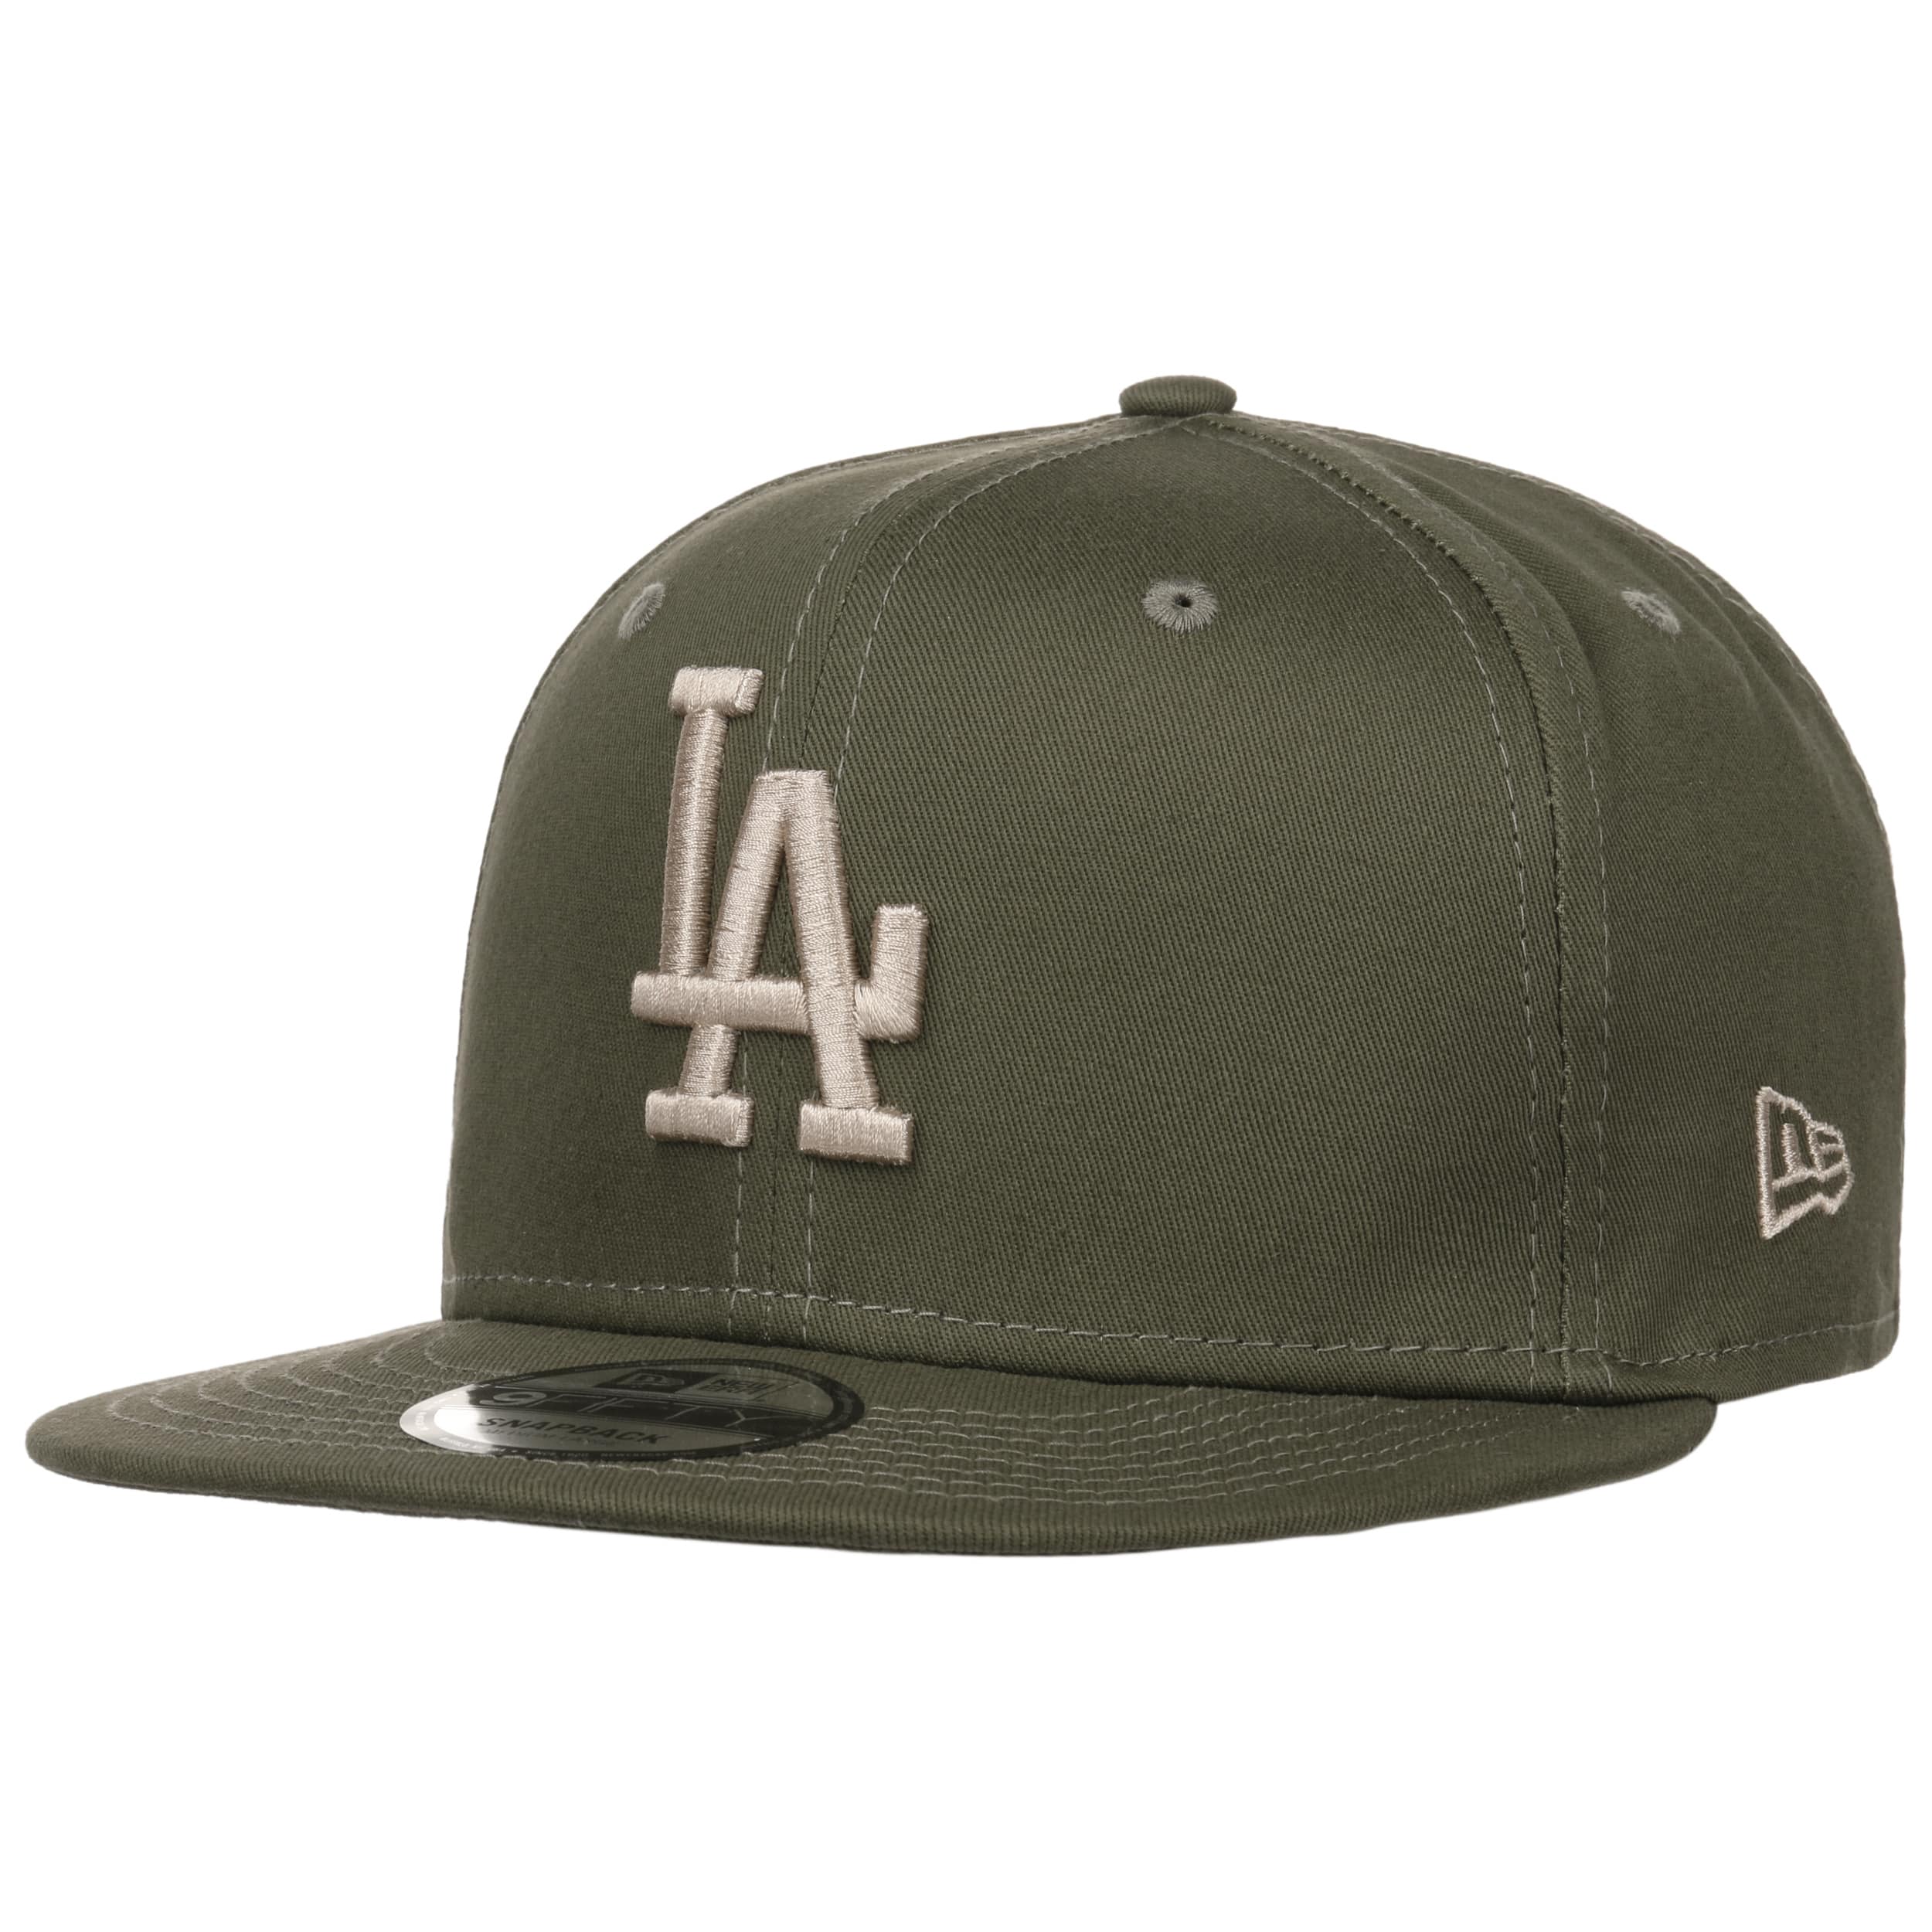 New Era MLB 9FIFTY Basic Adjustable Snapback Hat Cap One Size Fits All